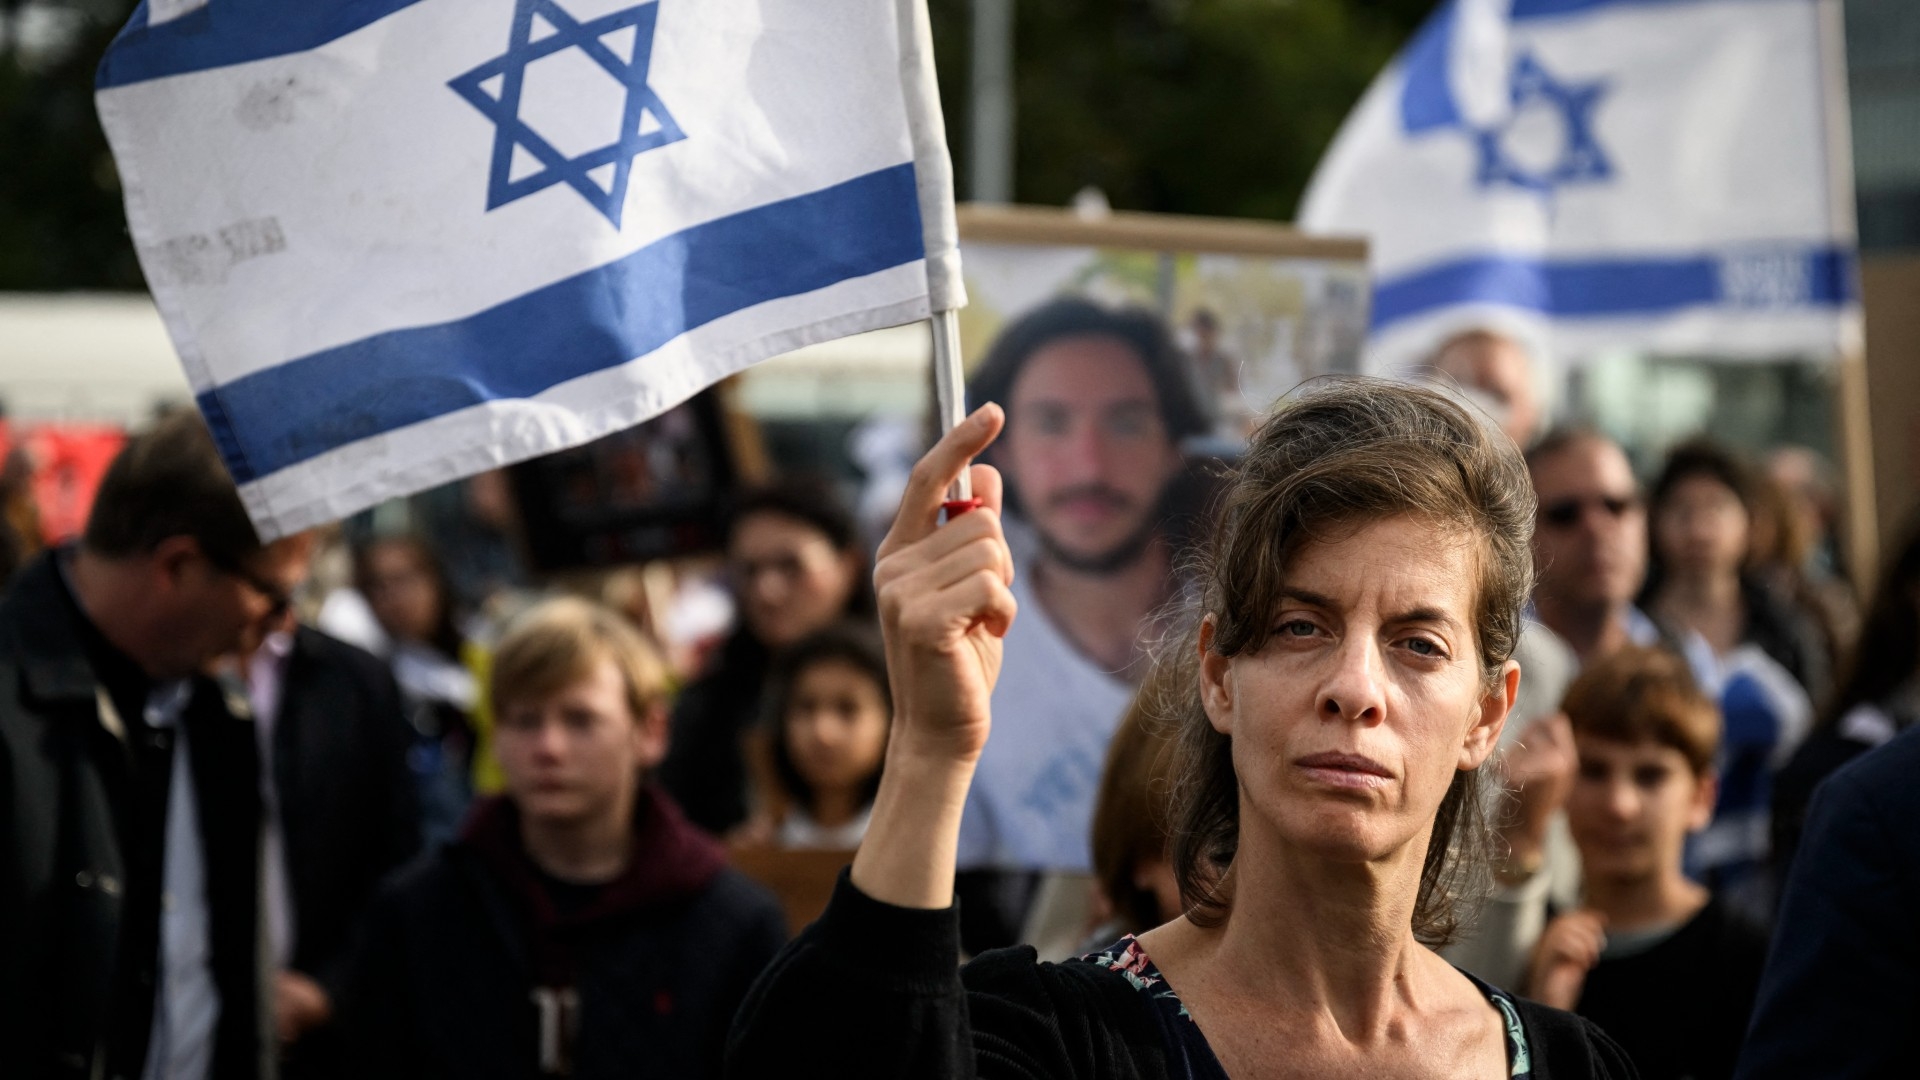 Supporters of Israel gather in Geneva on 22 October (AFP/Gabriel Monnet)